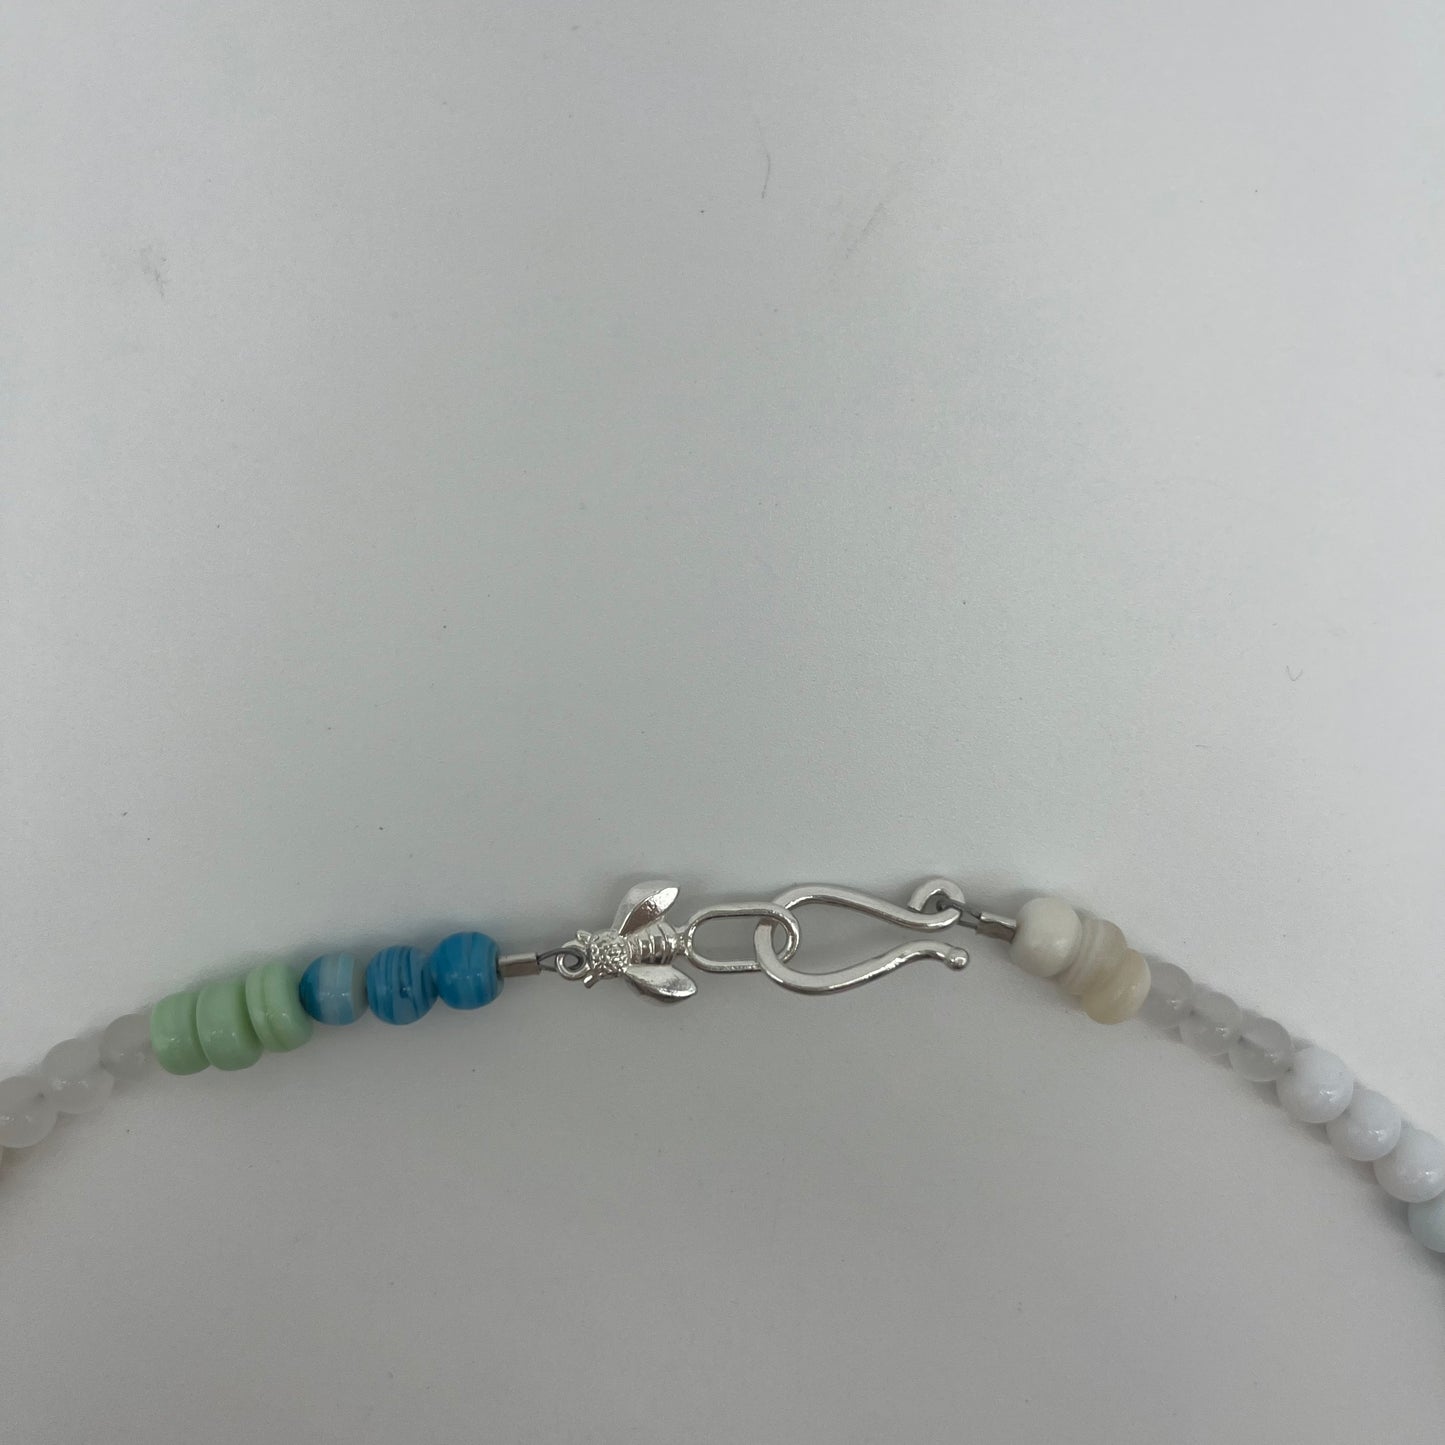 Single Strand Pastel Bright bead rainbow necklace